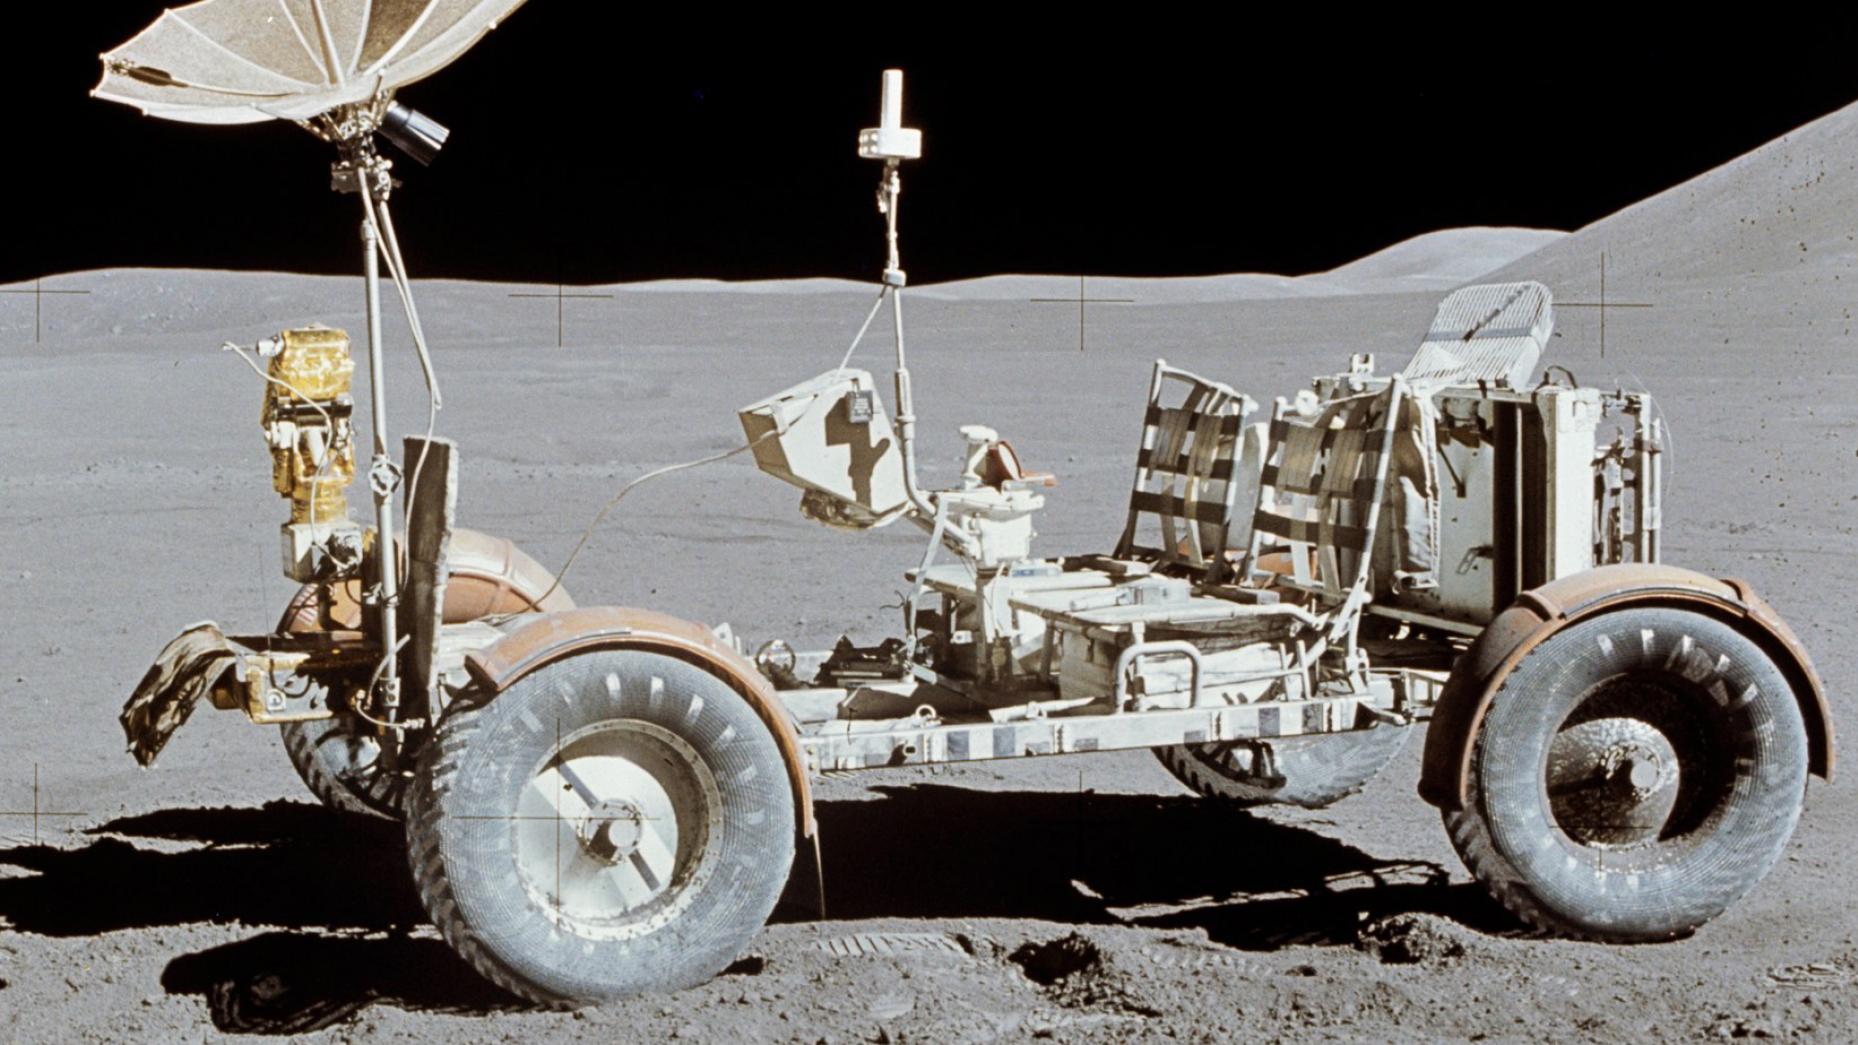 The Lunar Rover